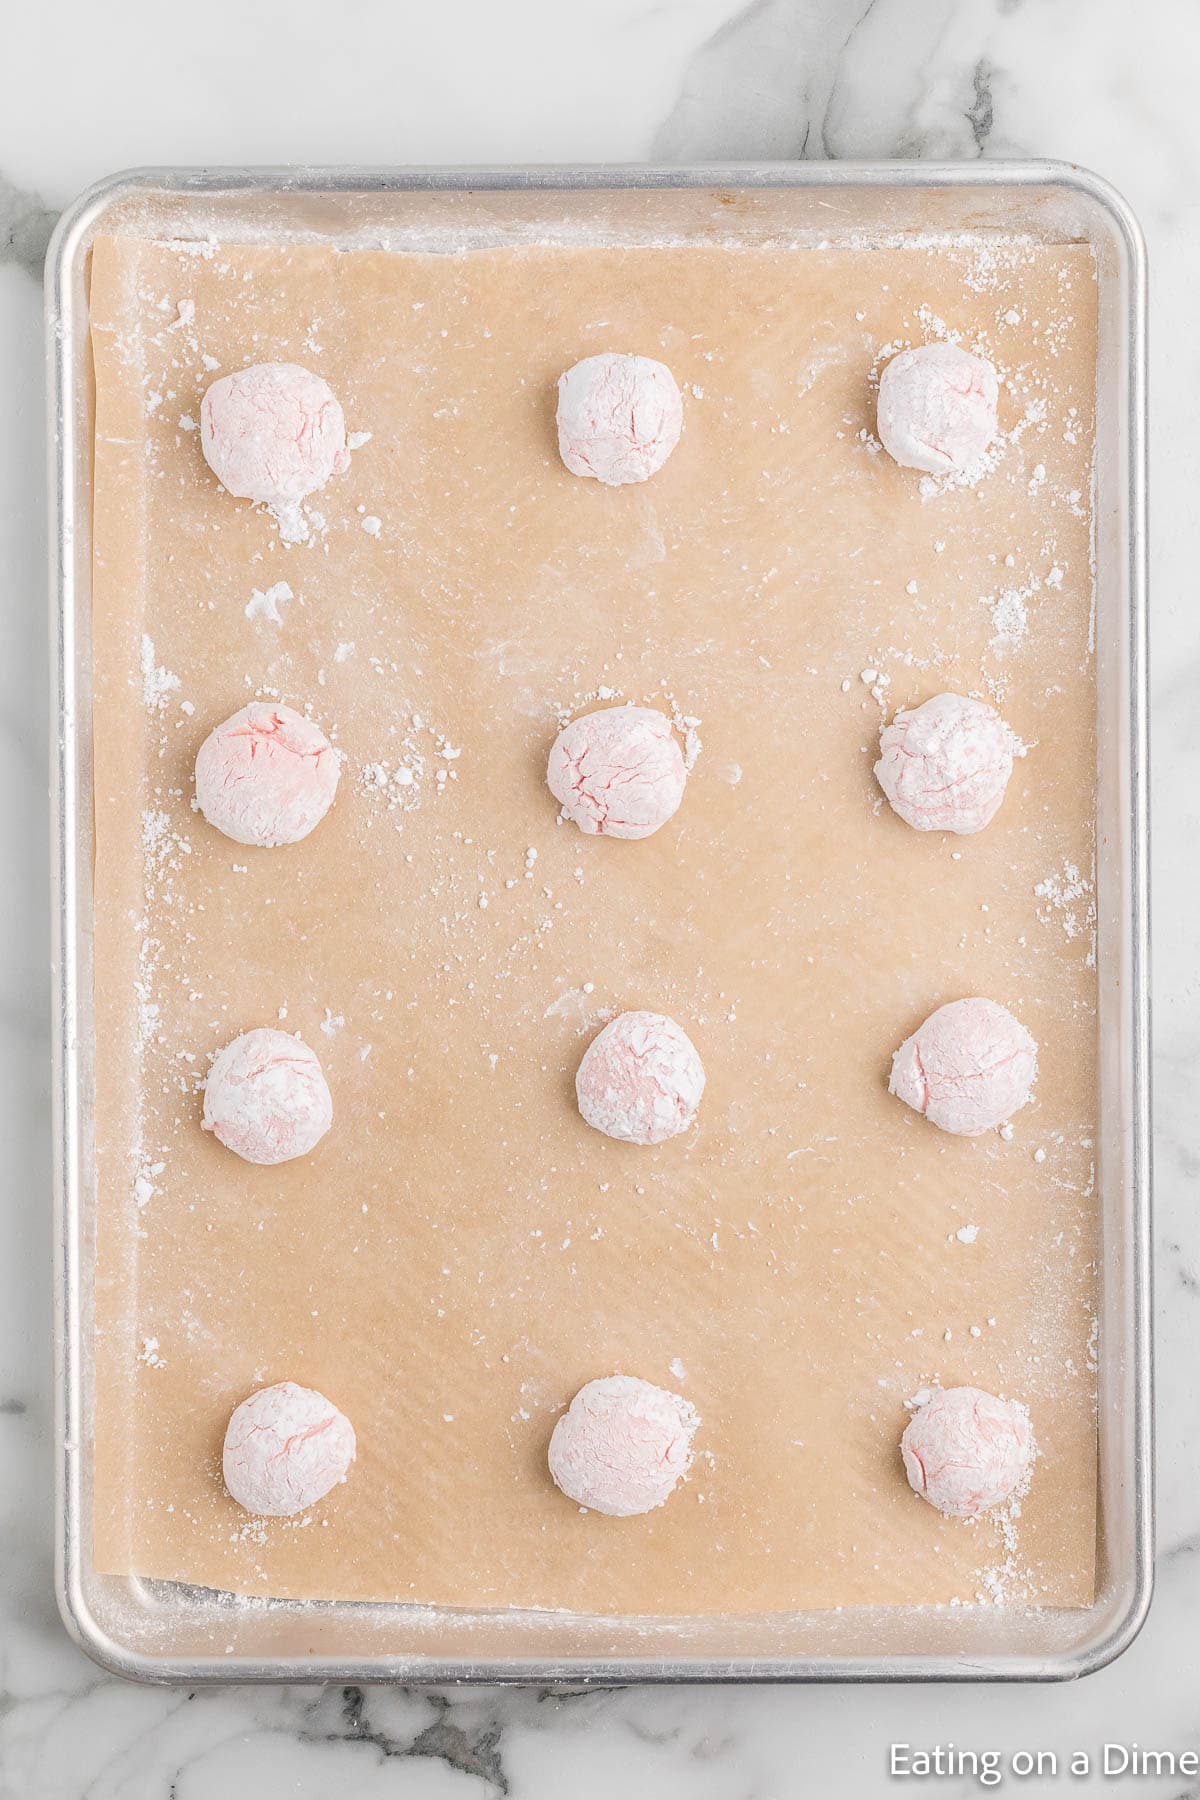 Placing dough balls on a baking sheet